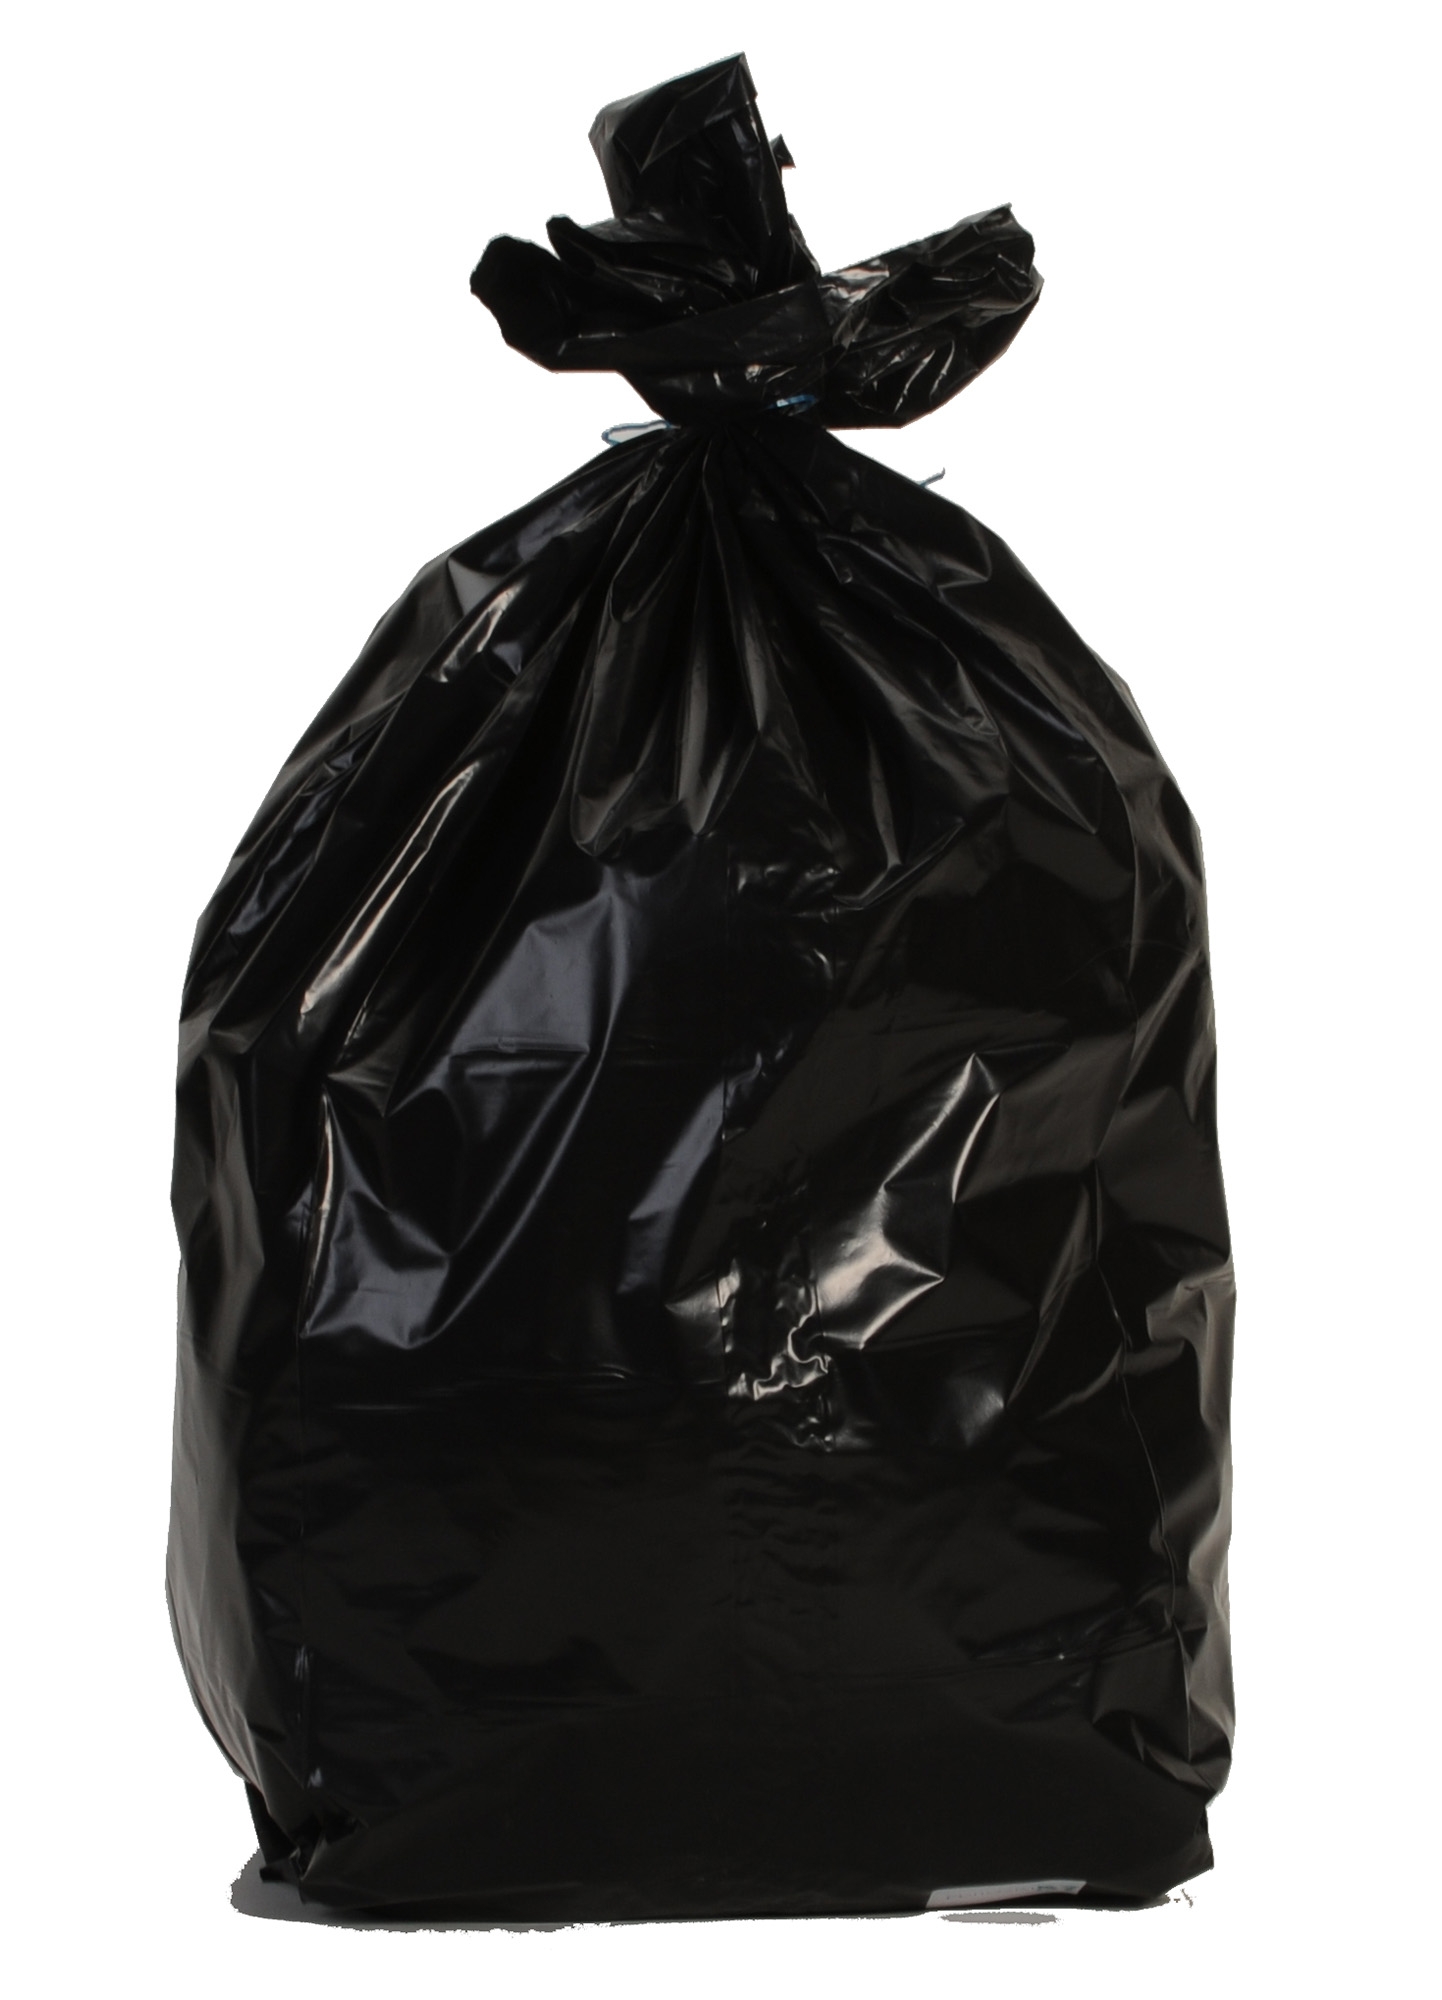 100 Pcs. ] Trash Bags / Garbage Bags Black / Transparent ( S, M, L, XL, XXL  )